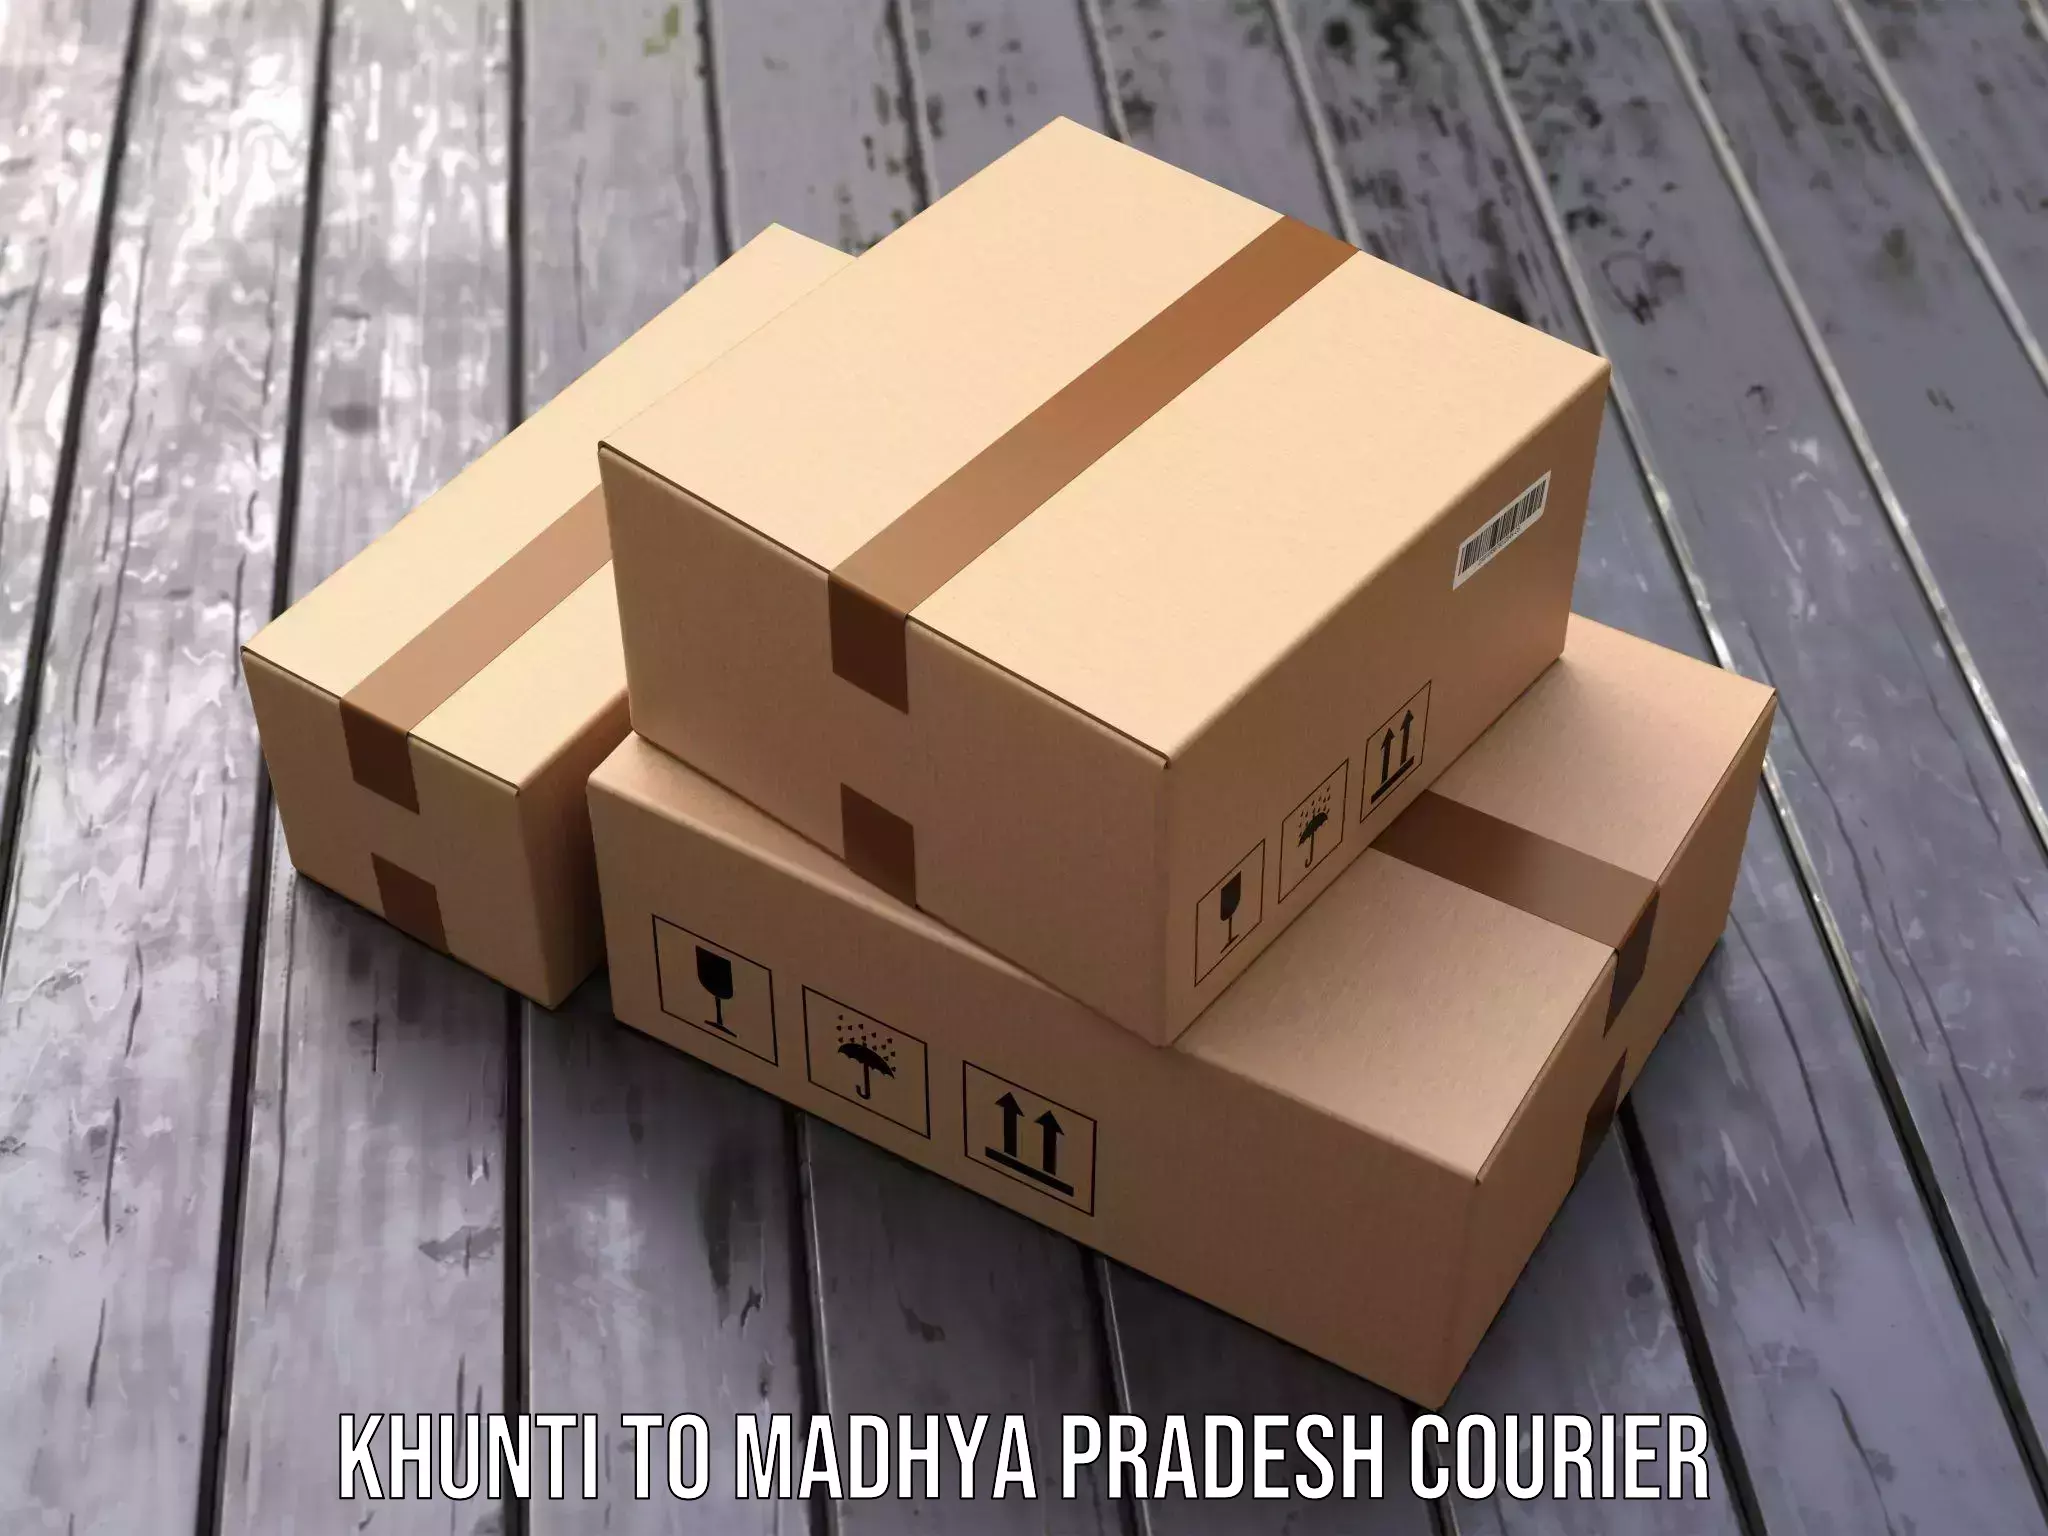 Cash on delivery service Khunti to Madhya Pradesh